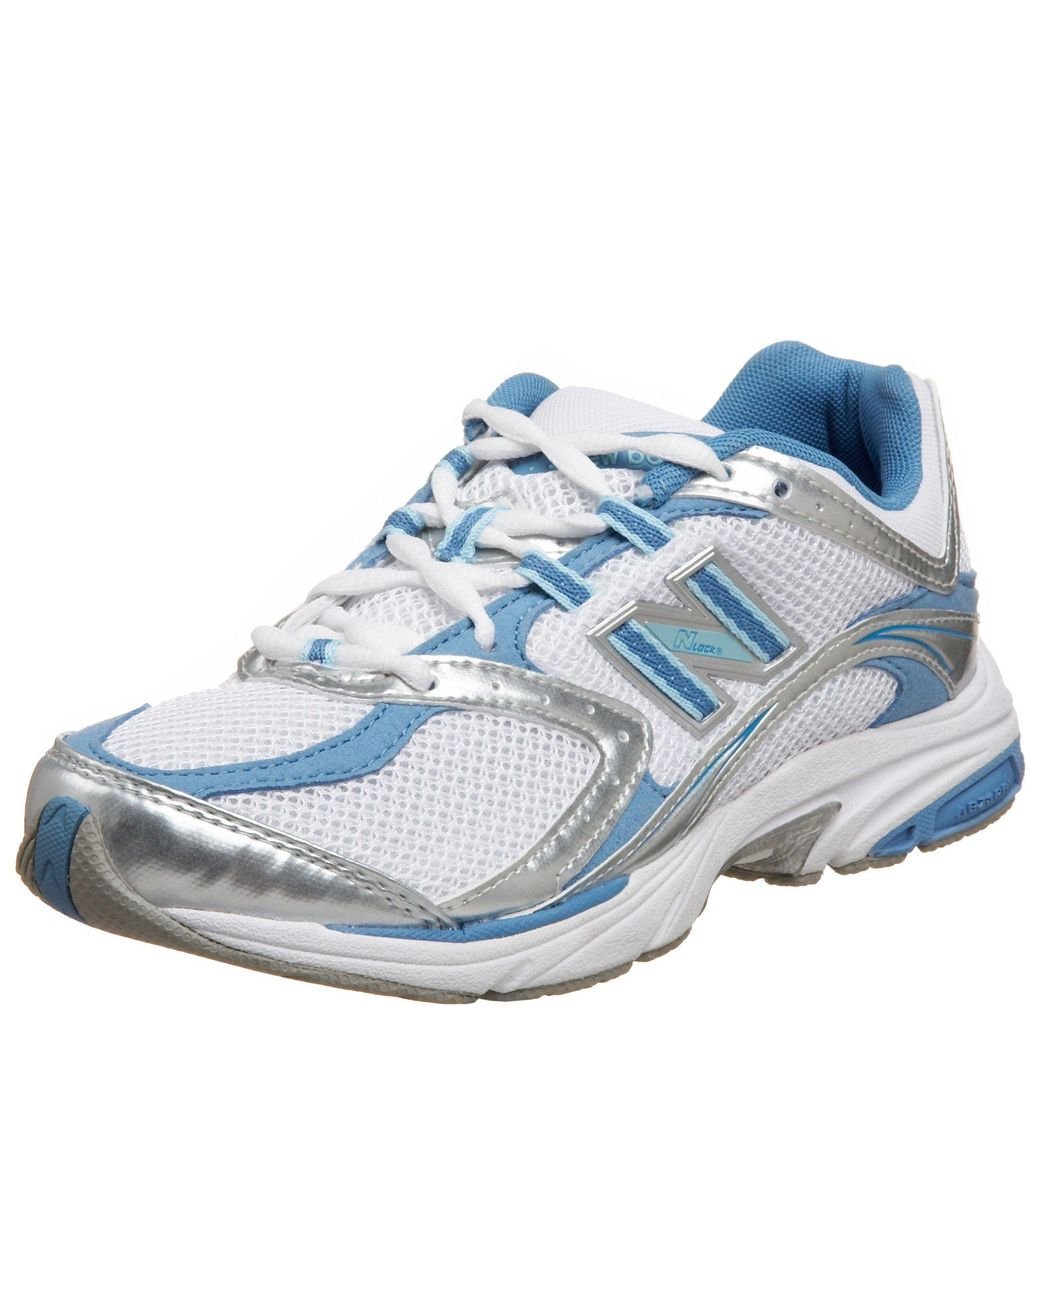 New Balance 760 V1 Walking Shoe in Blue | Lyst